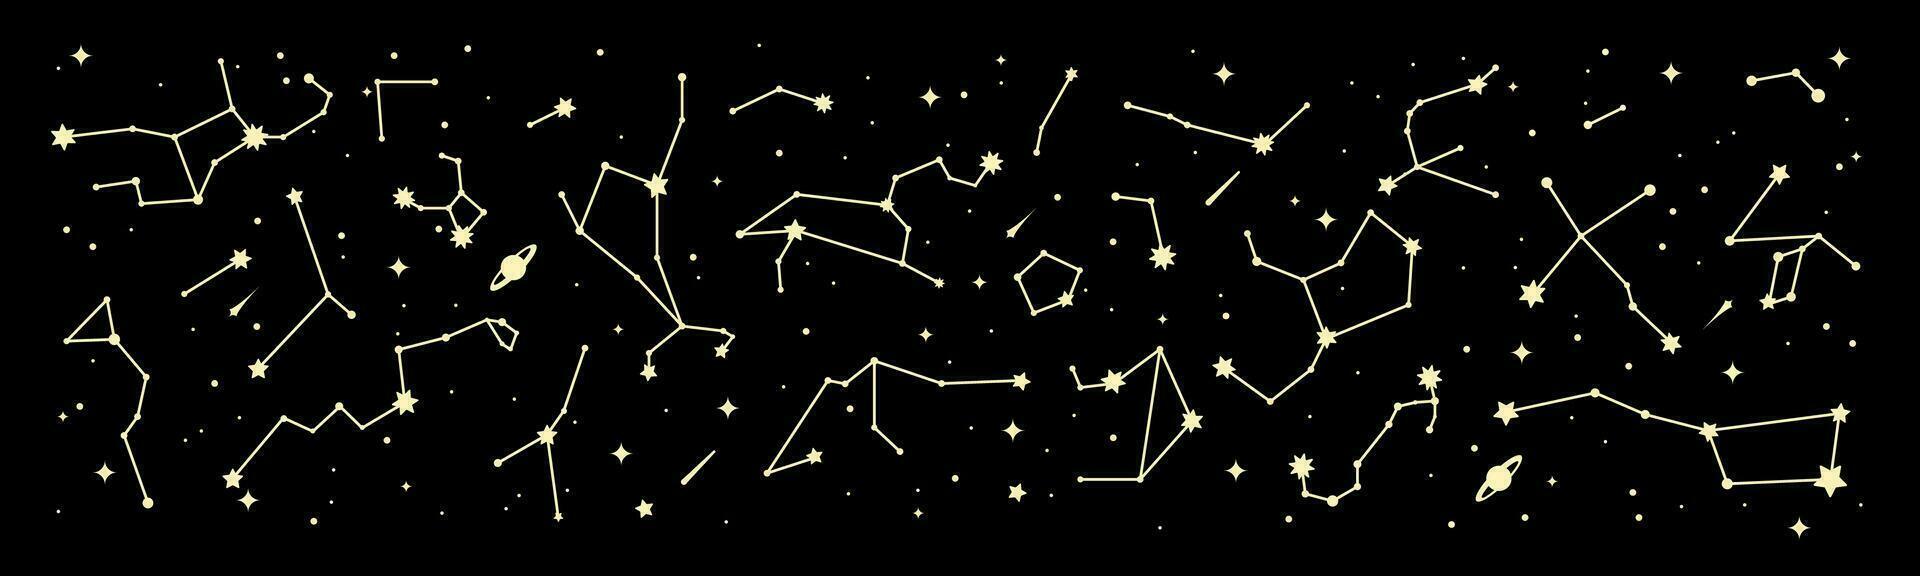 Space star constellation border, night sky map vector